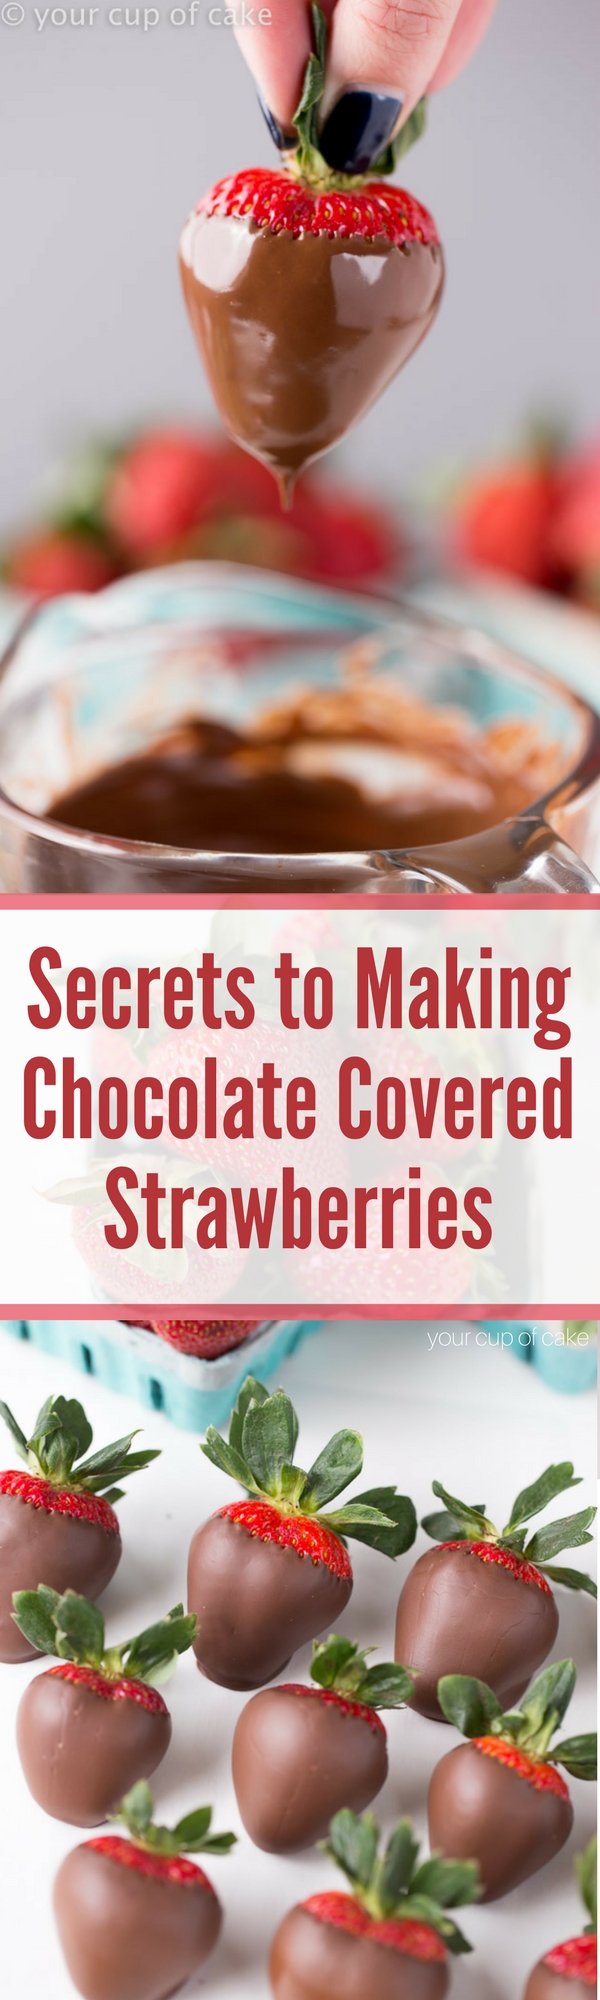 How to Make Chocolate Strawberries - Easy Homemade Tutorial